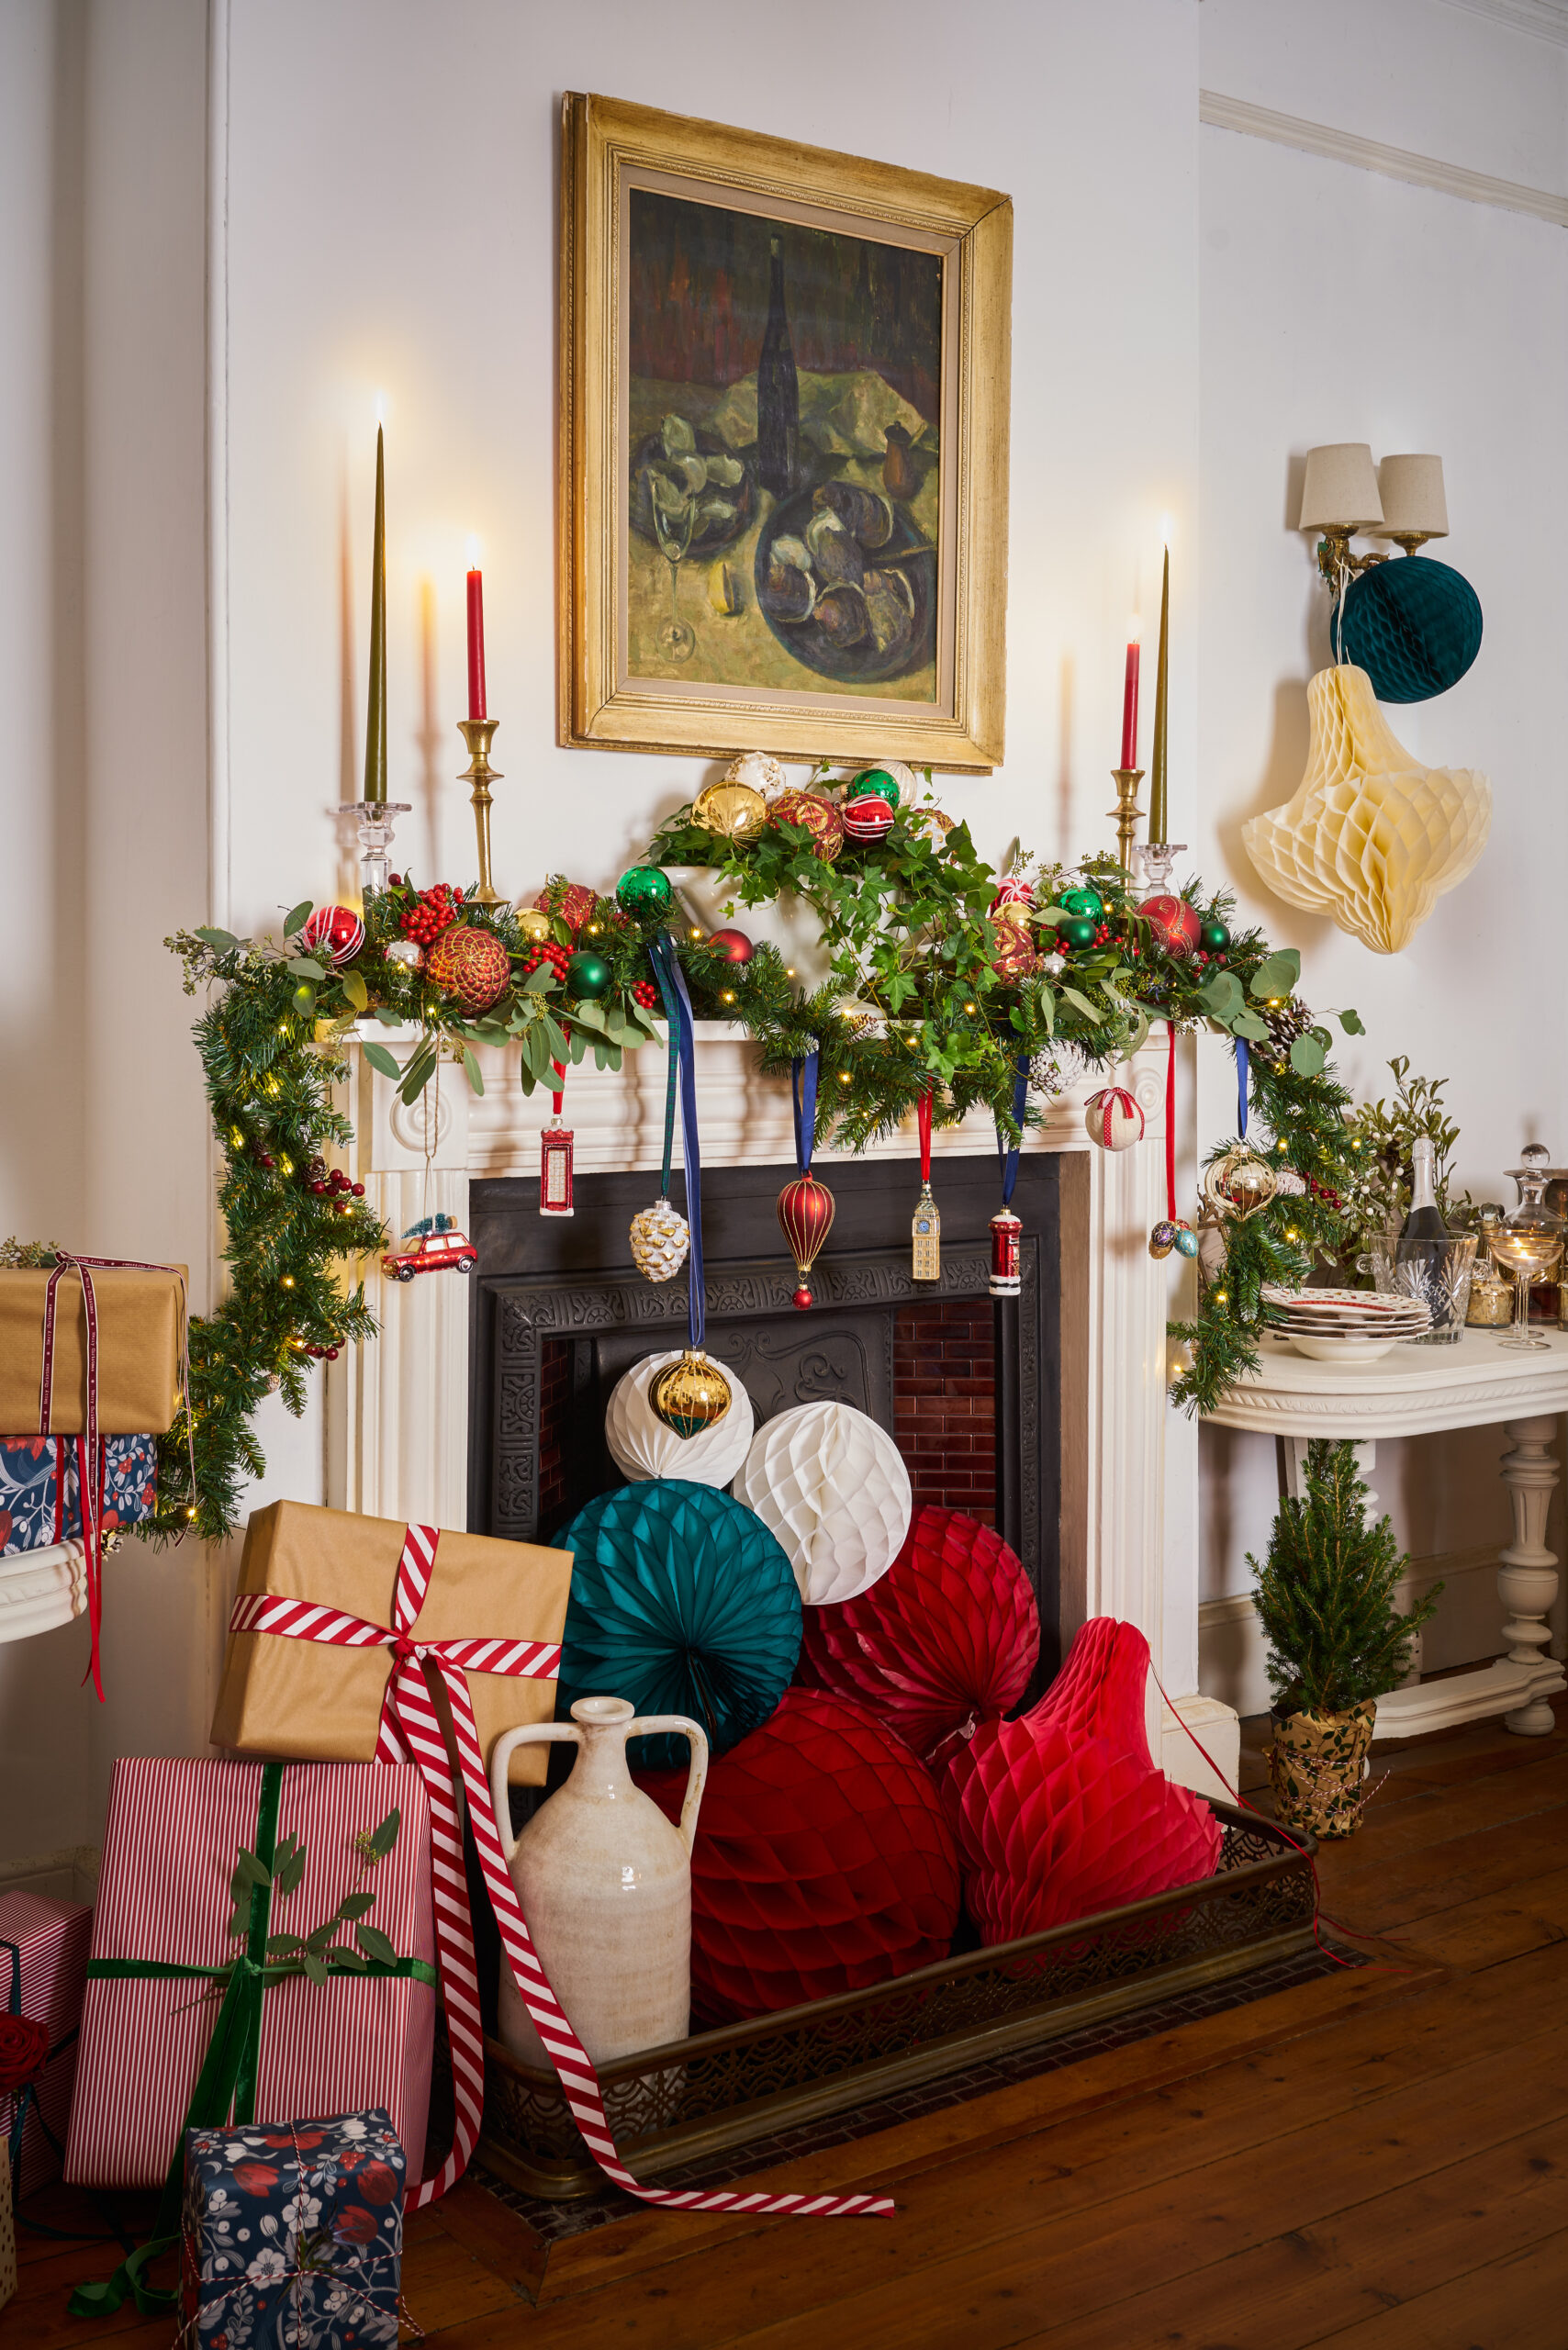 Amazing Christmas garlands for home decor